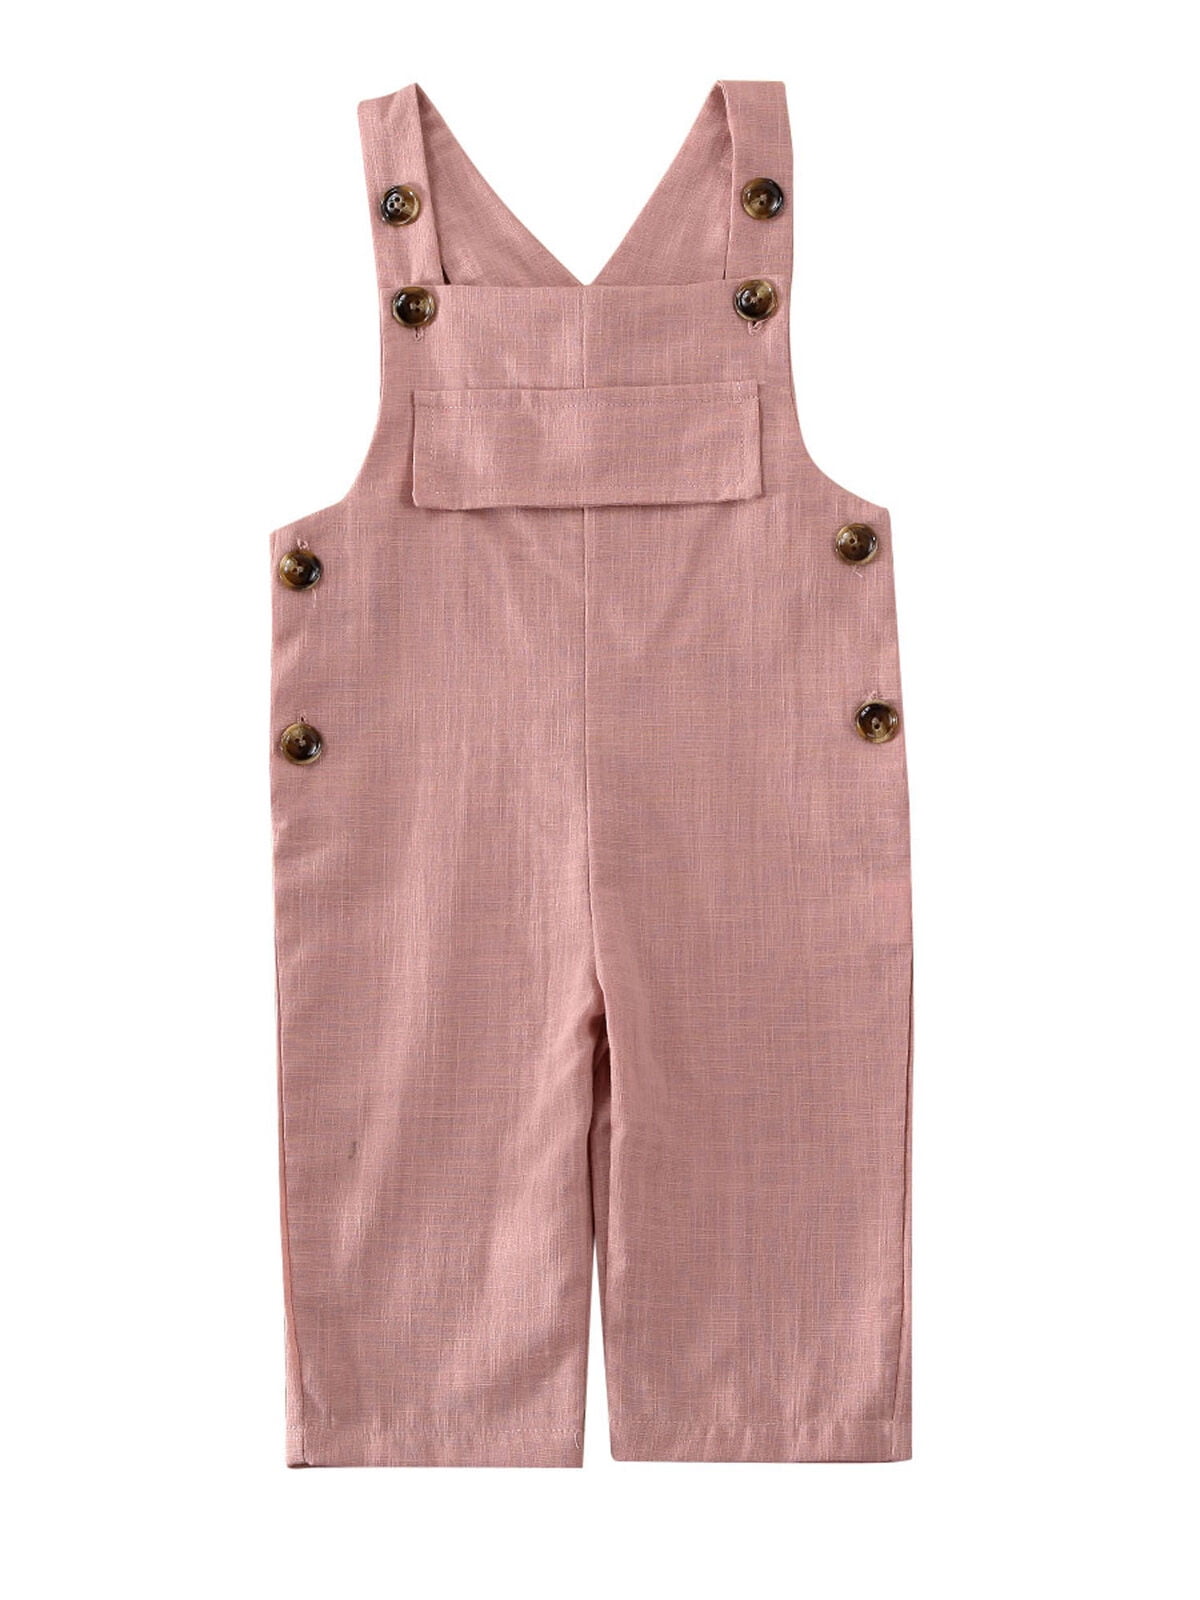 Toddler Kids Baby Boy Girl Bib Overalls Suspender Pants Solid Straps Trousers Halter Romper Jumpsuit Bottom Outfit